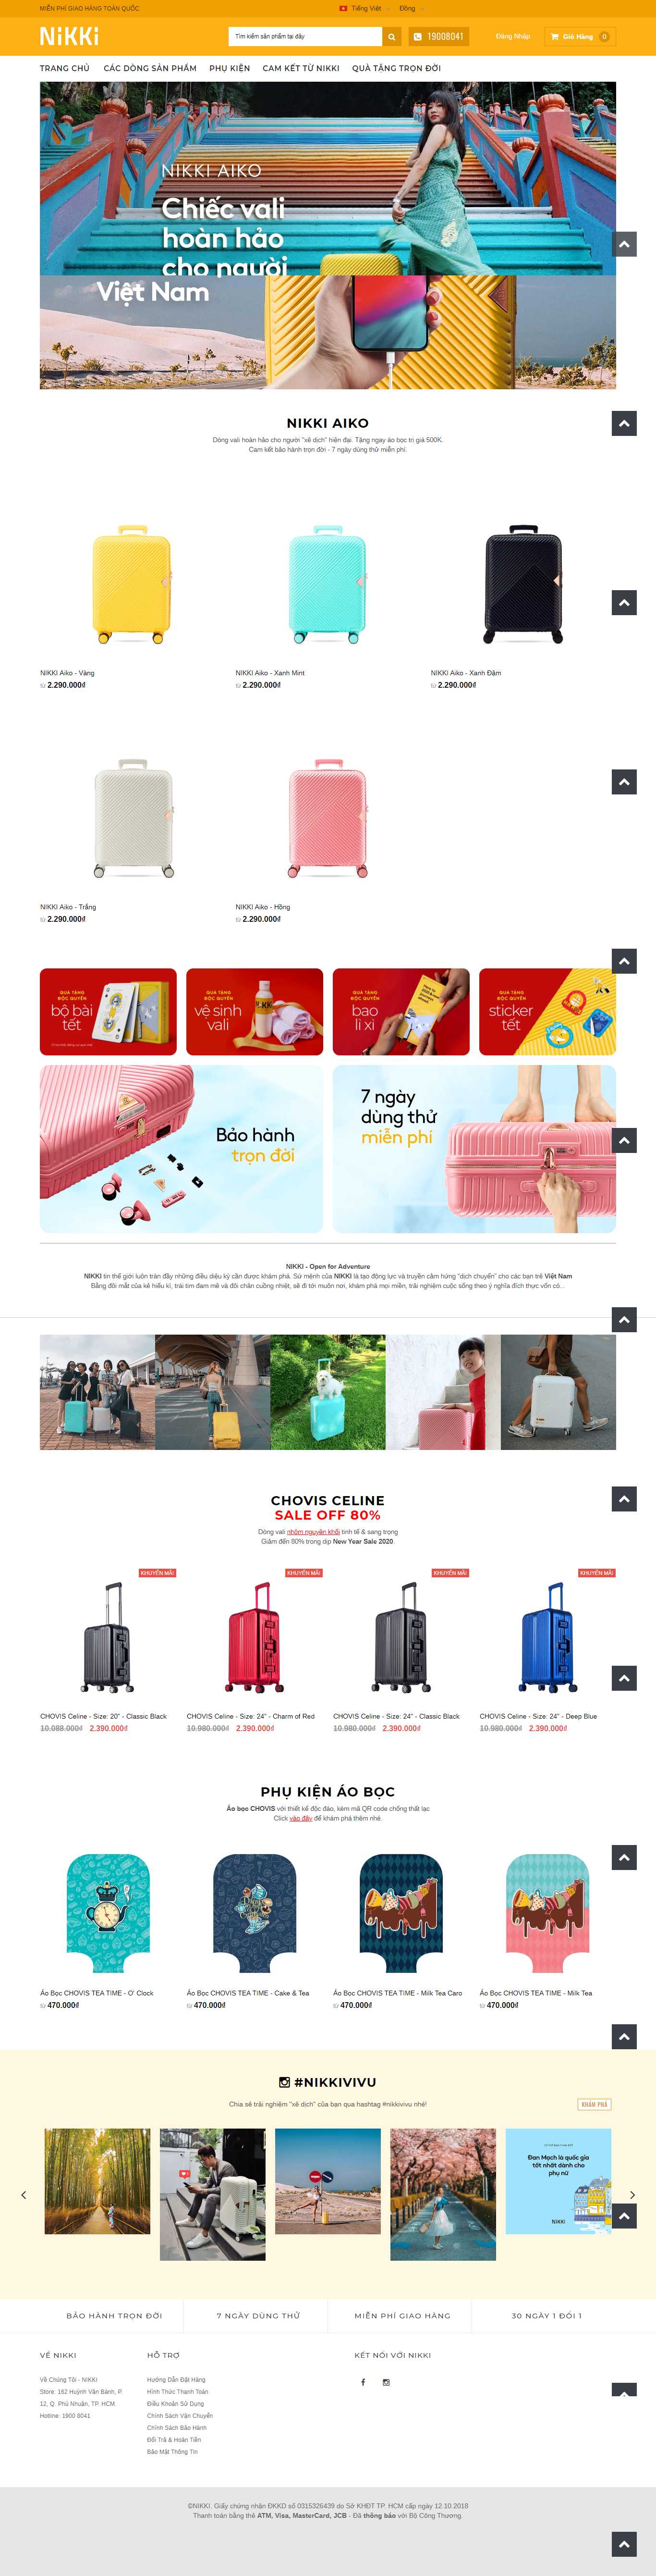 Thiết kế Website cửa hàng vali - nikki.vn